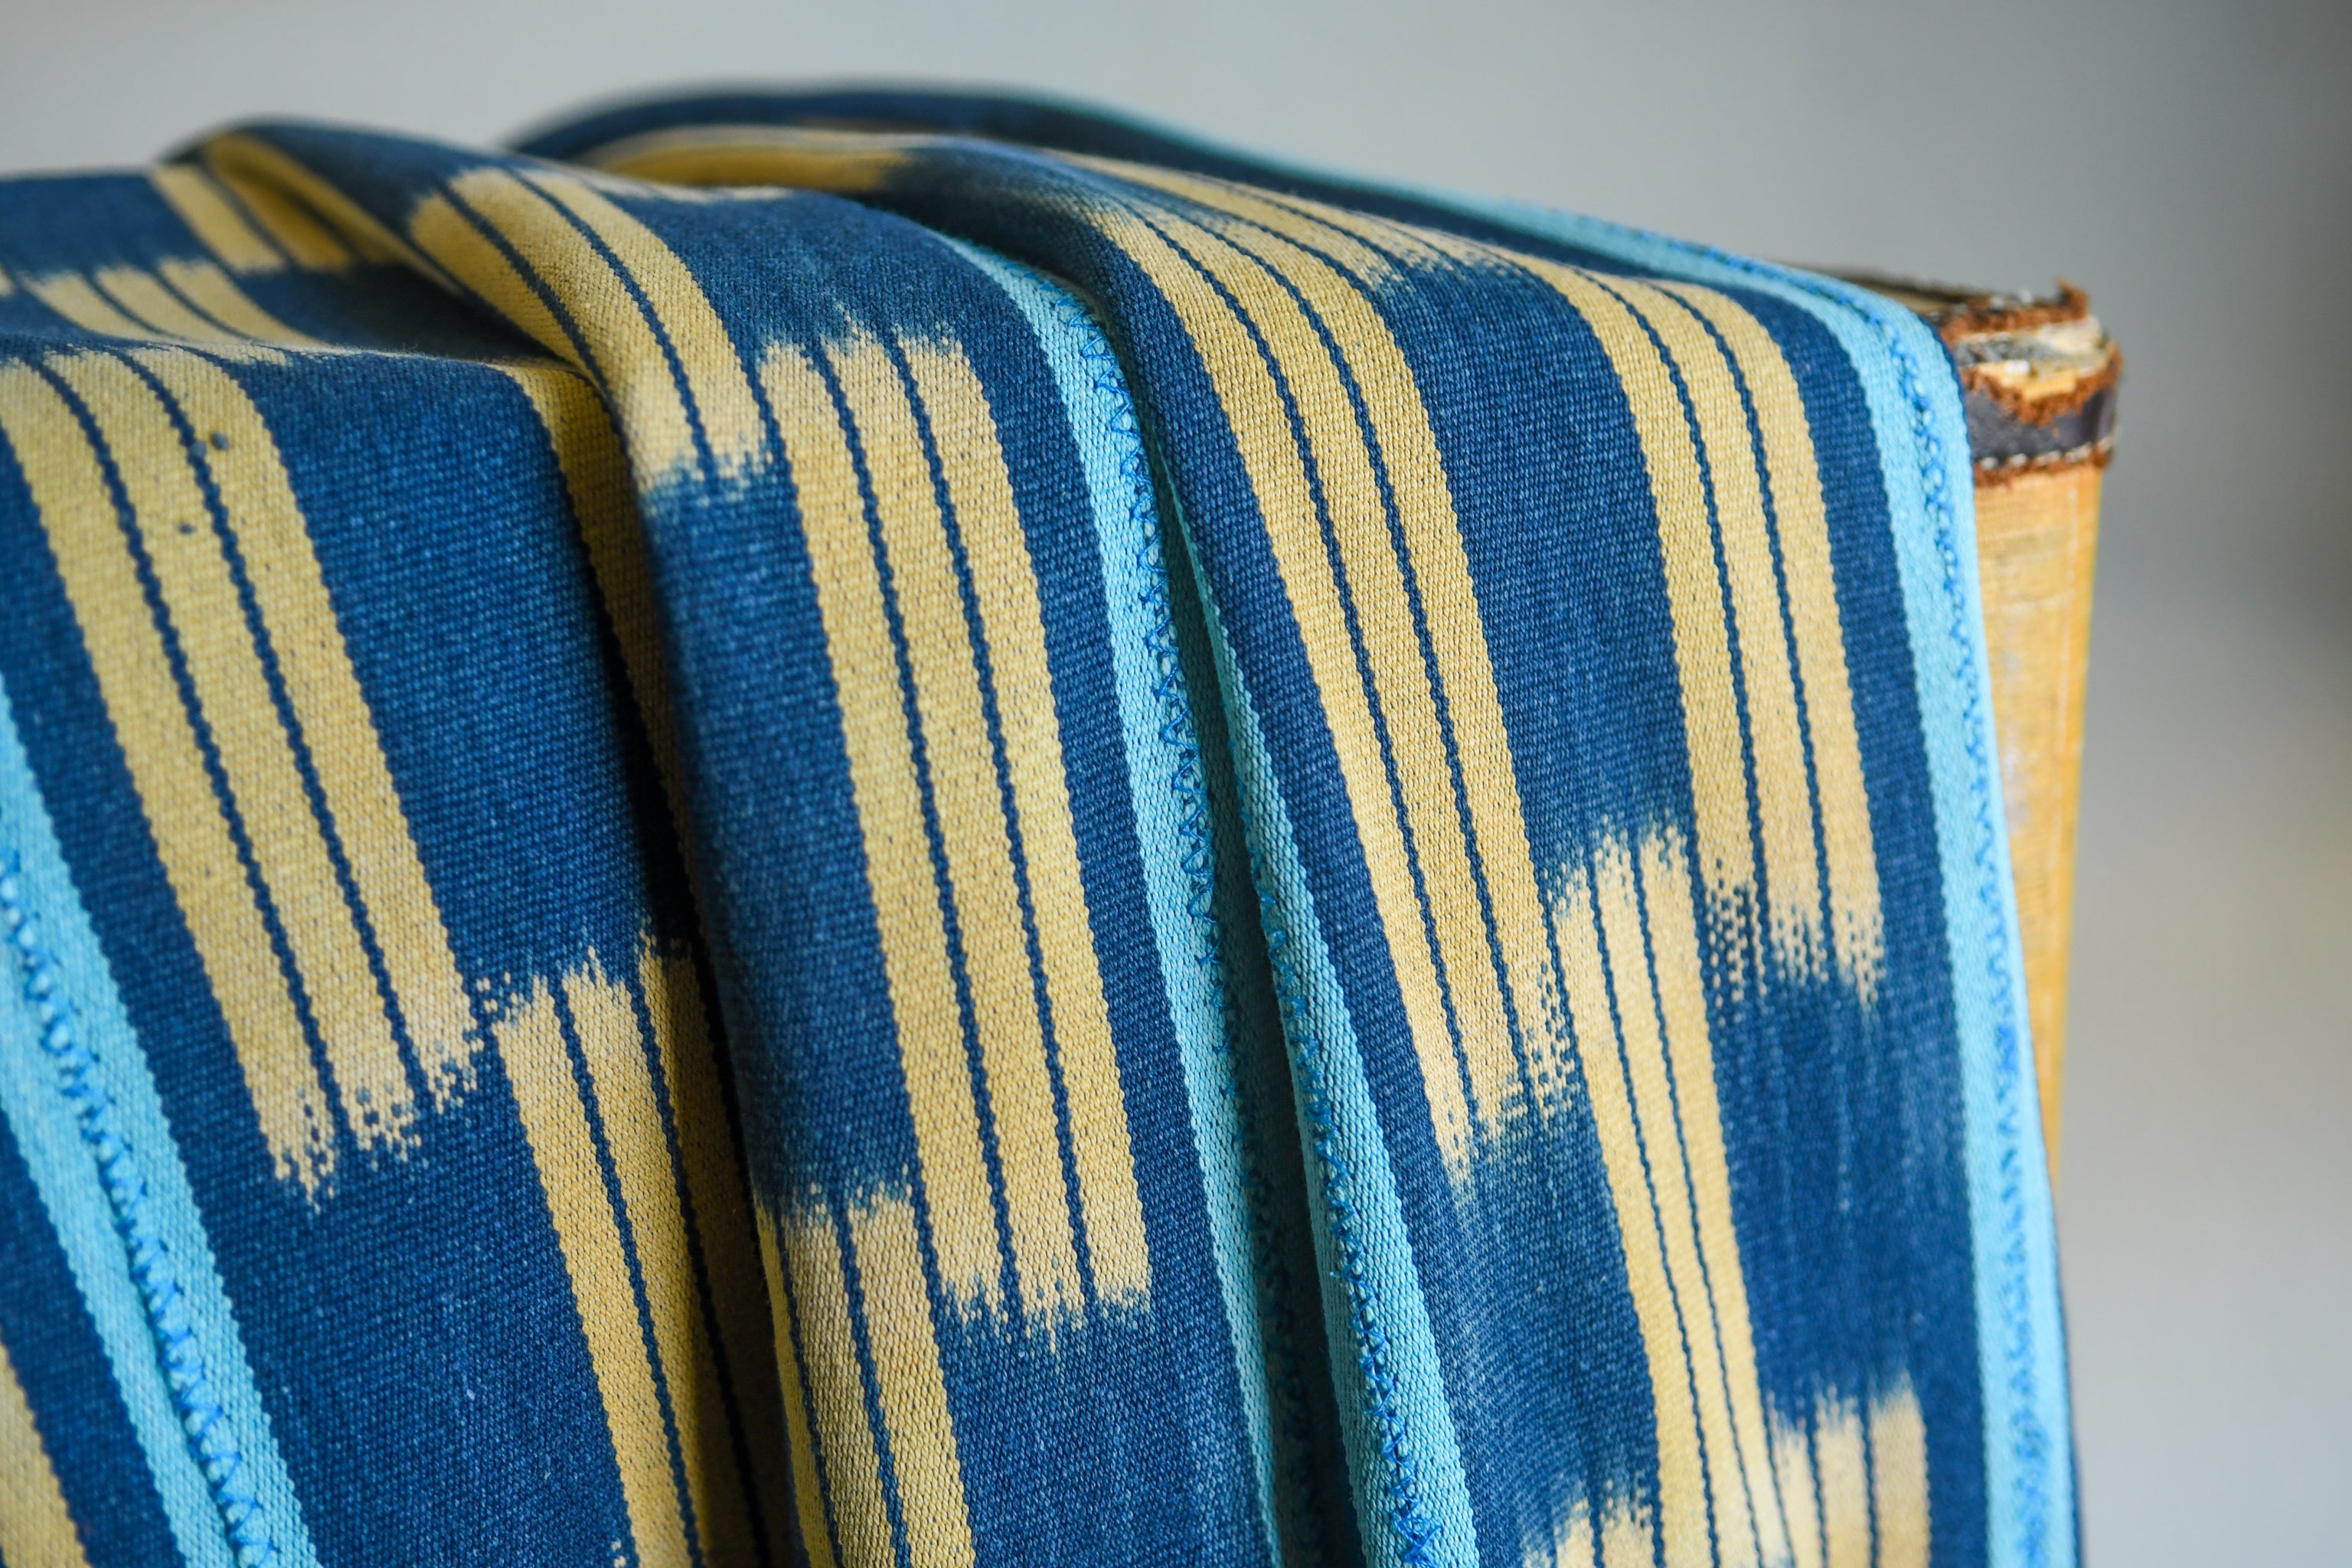 Indigo Dyed Ikat Fabric, African Baule Textile